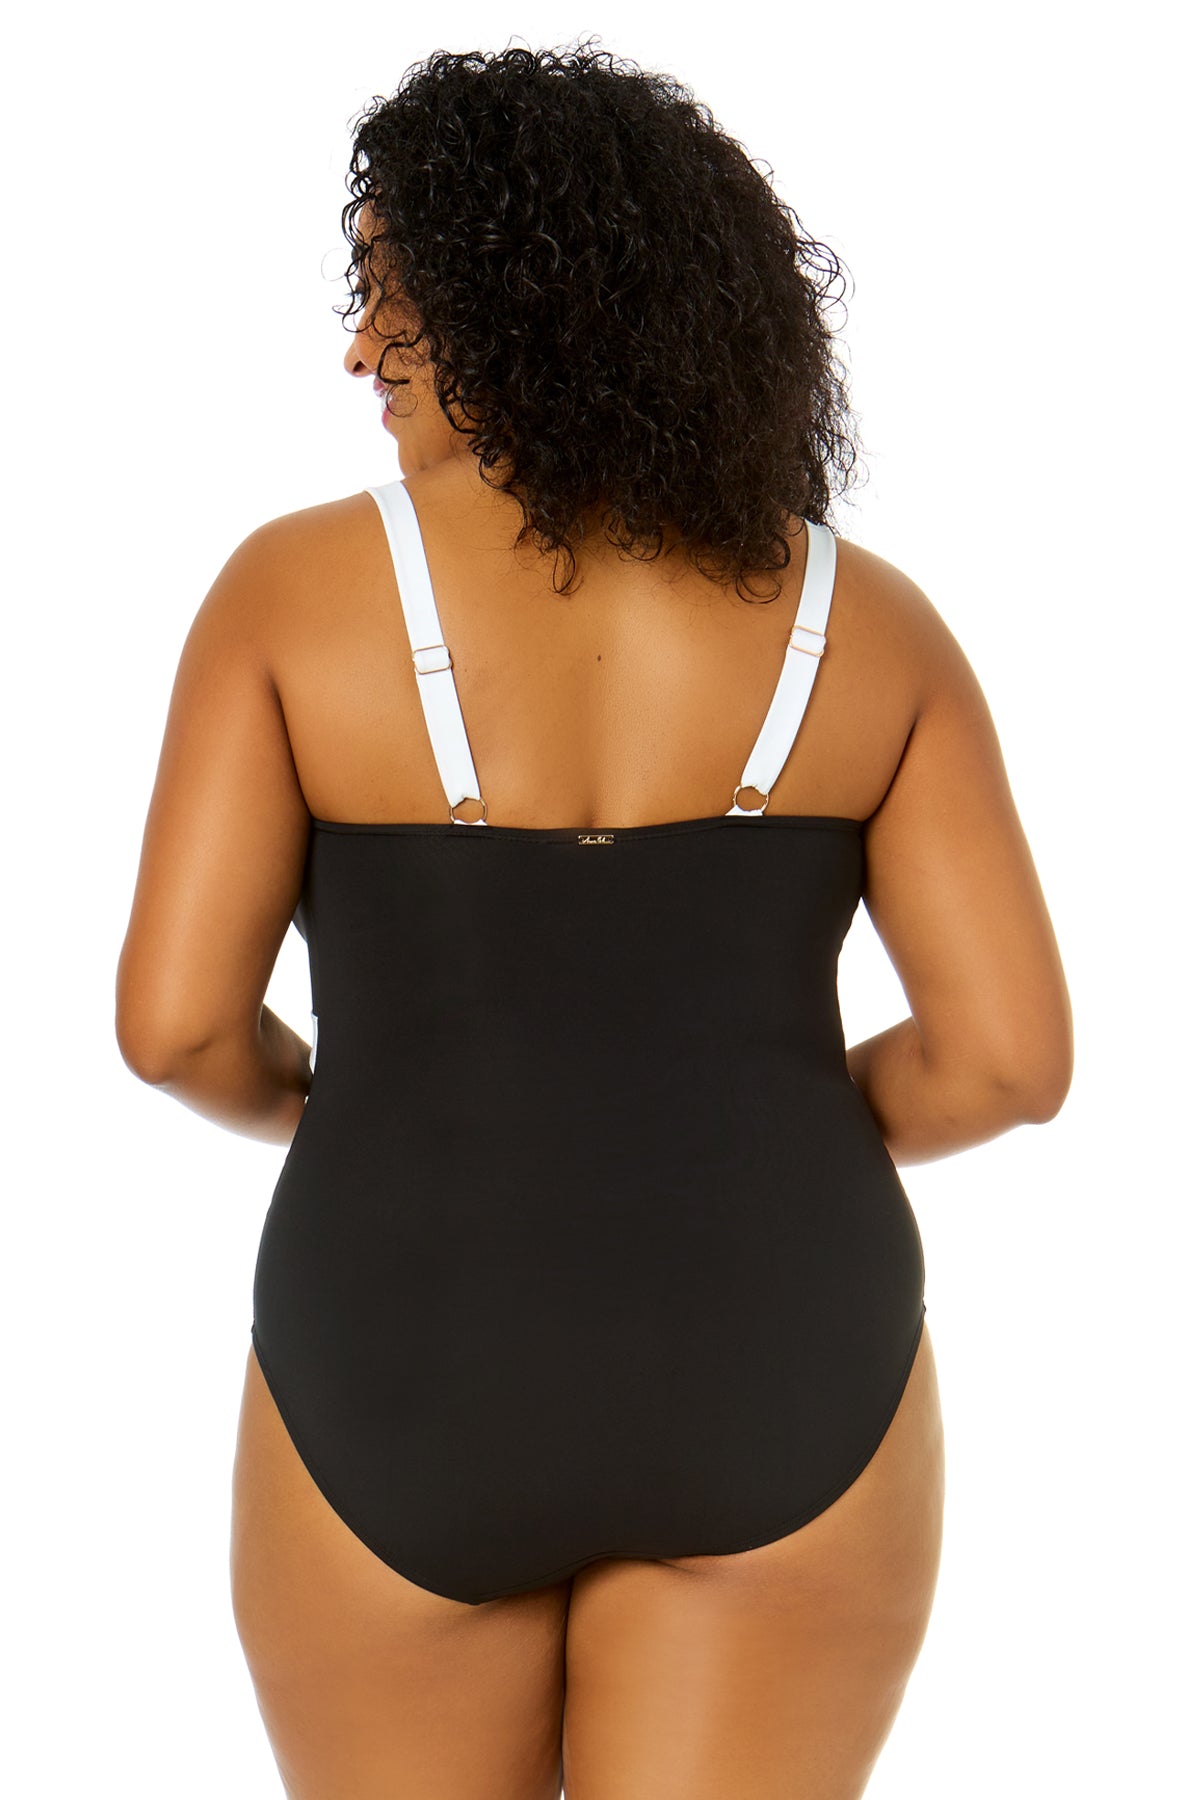 Plus Size Women's Solid Swimsuits: One-Piece, Tankini & Bikinis